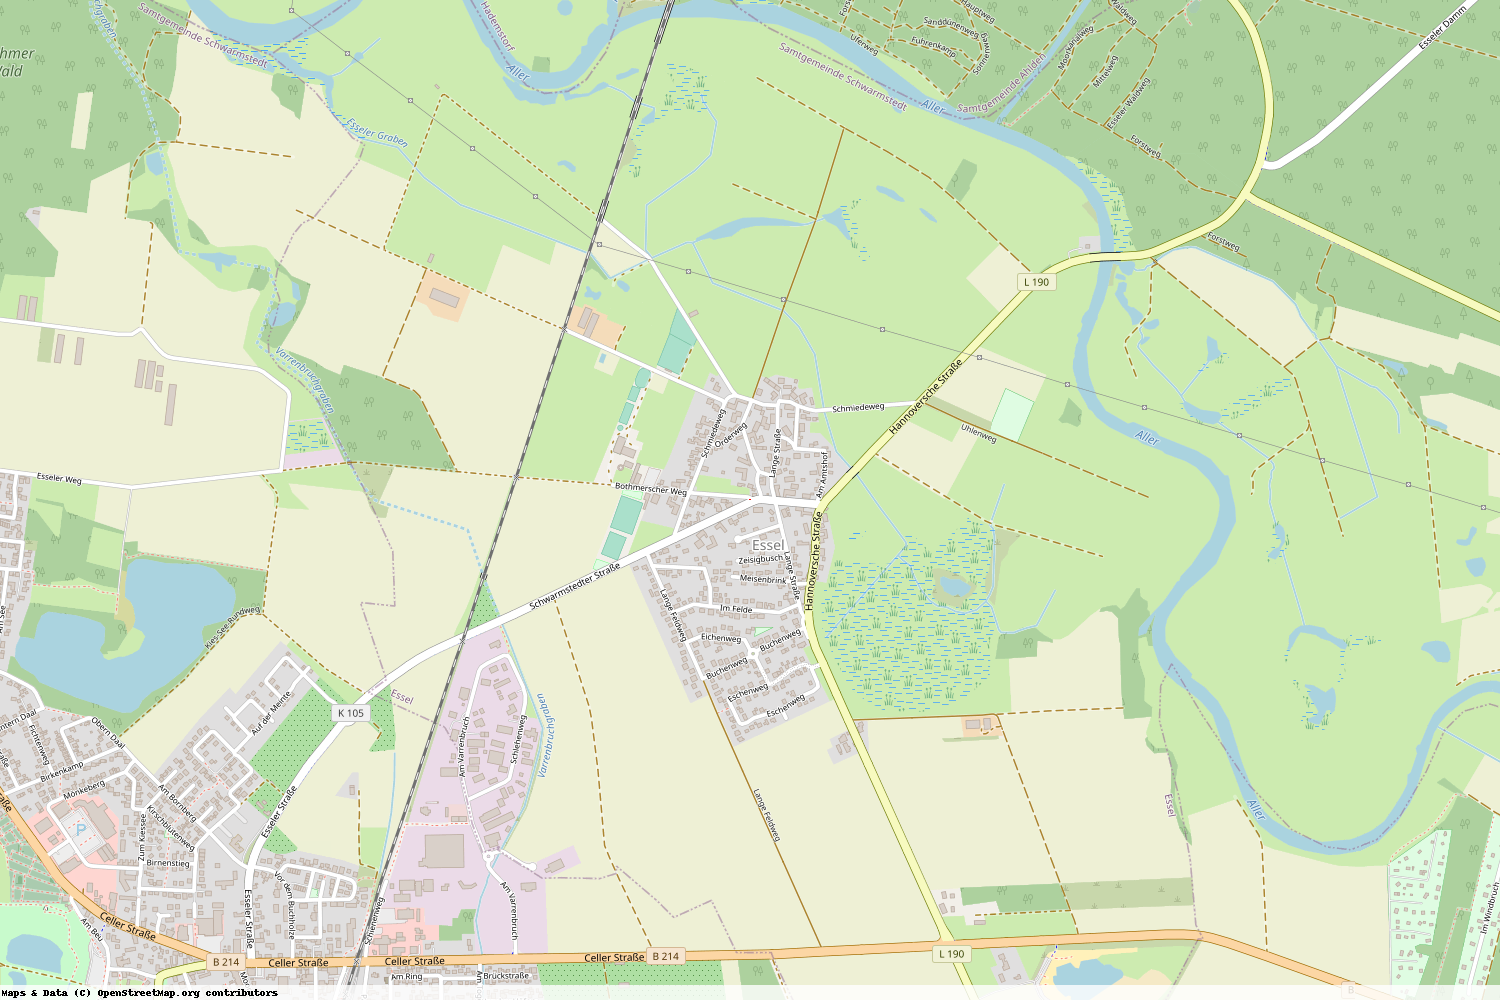 Ist gerade Stromausfall in Niedersachsen - Heidekreis - Essel?